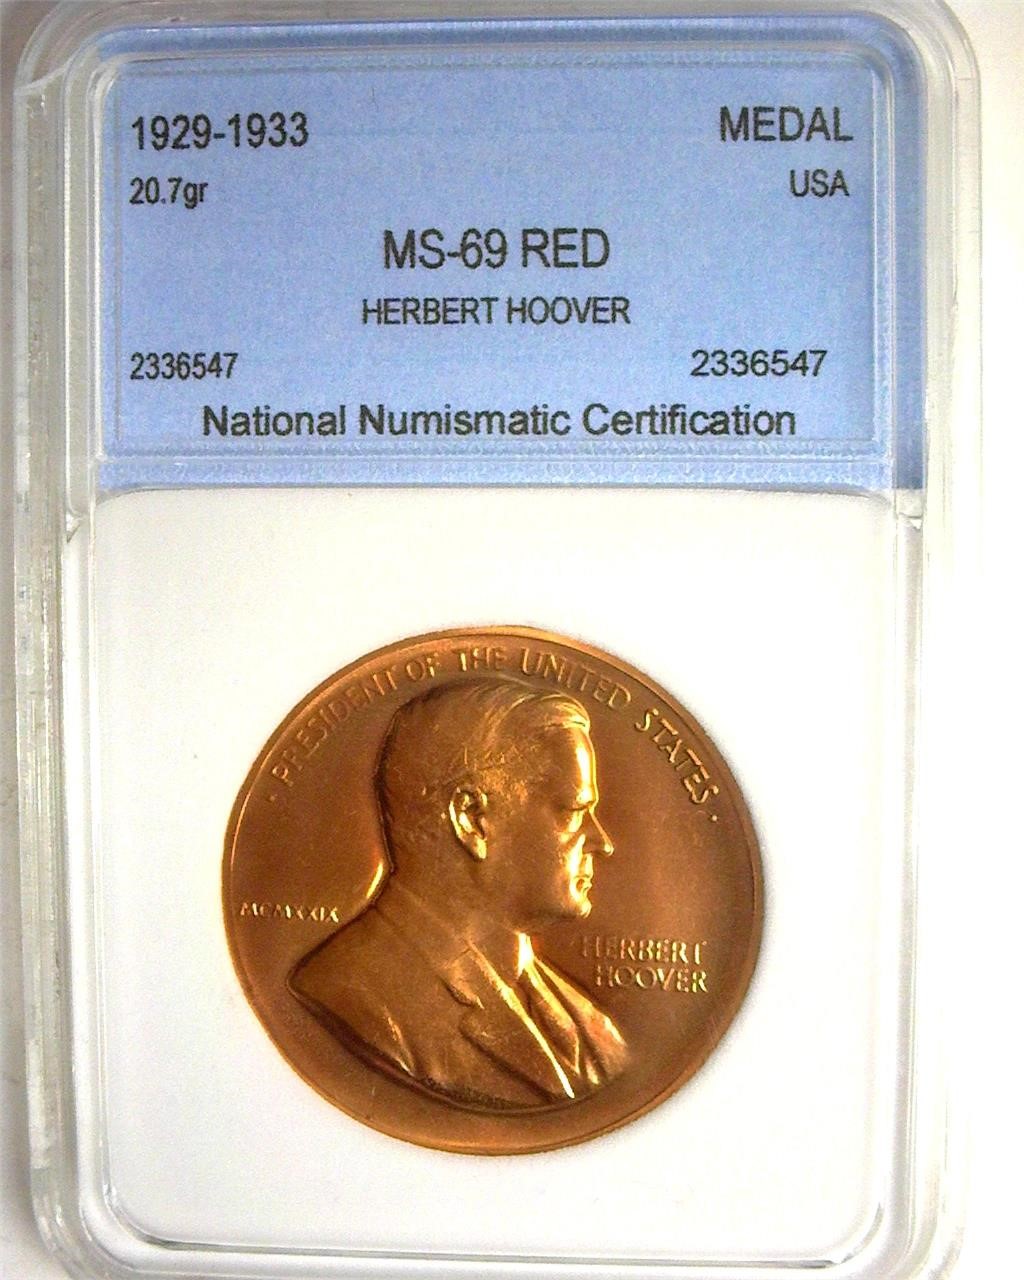 1929-1933 Medal NNC MS69 RD Herbert Hoover